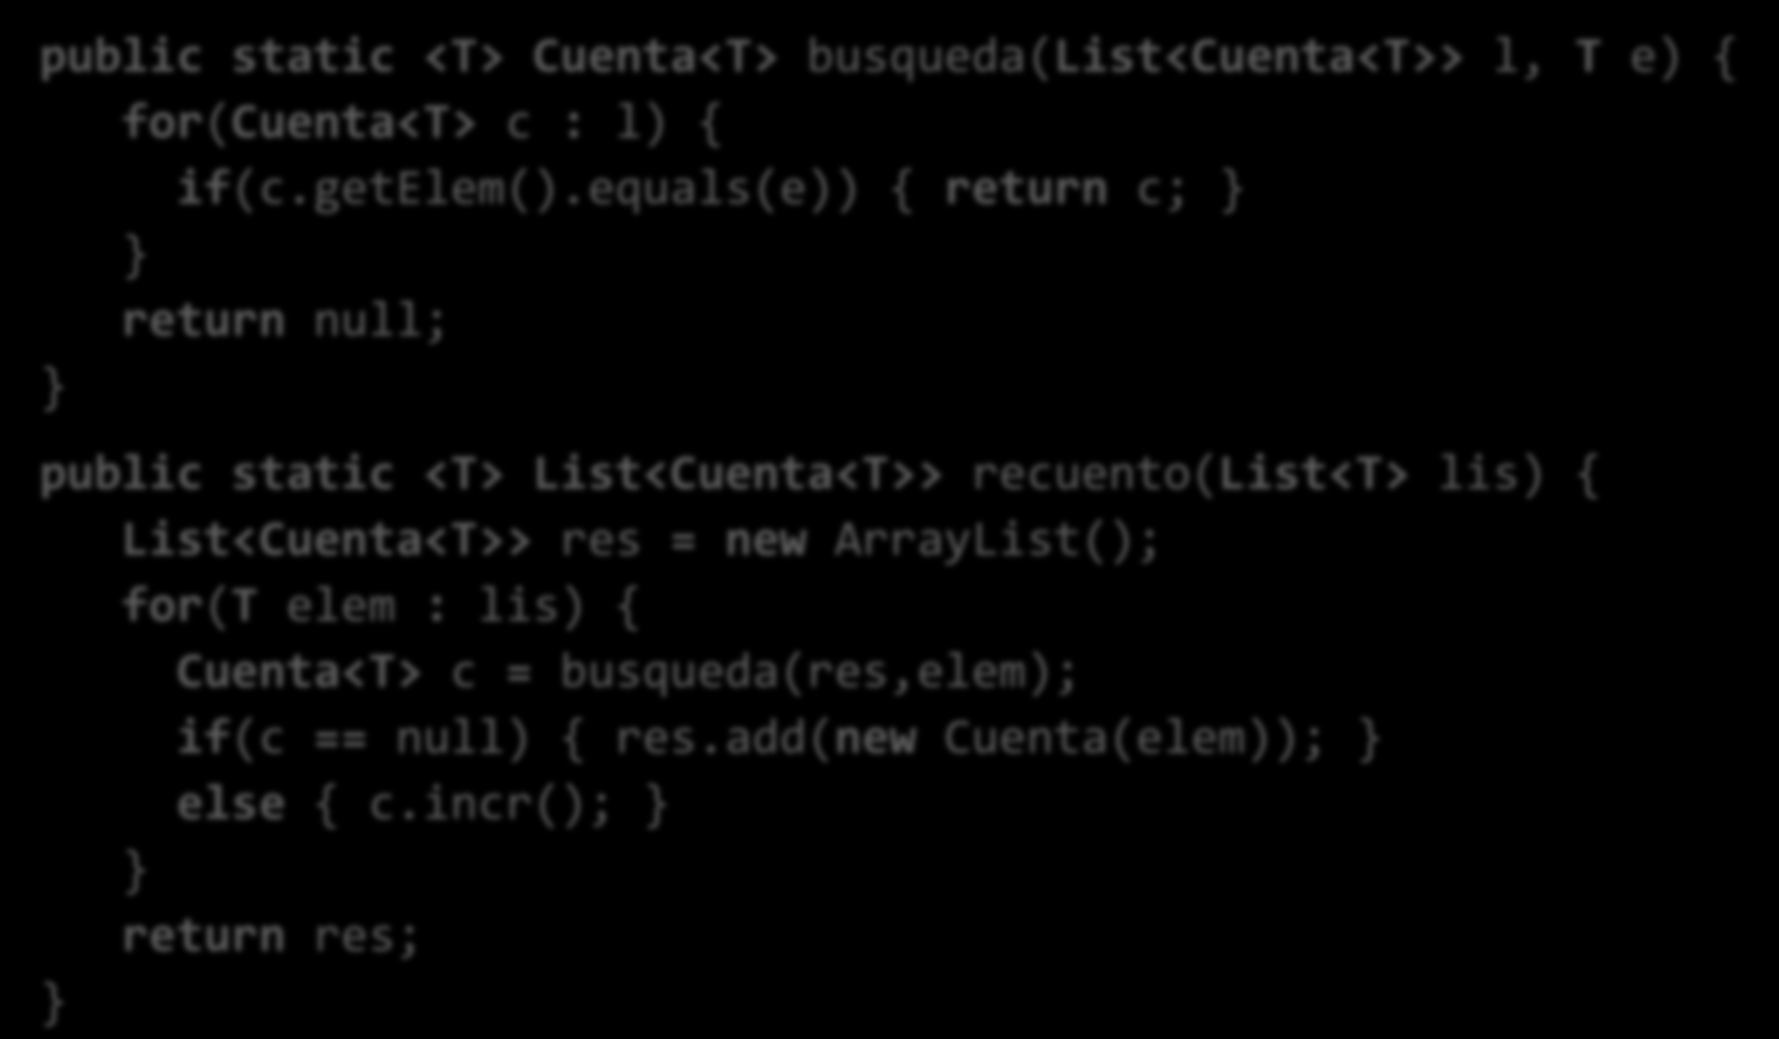 Solución Java (II) public static <T> Cuenta<T> busqueda(list<cuenta<t>> l, T e) { for(cuenta<t> c : l) { if(c.getelem().